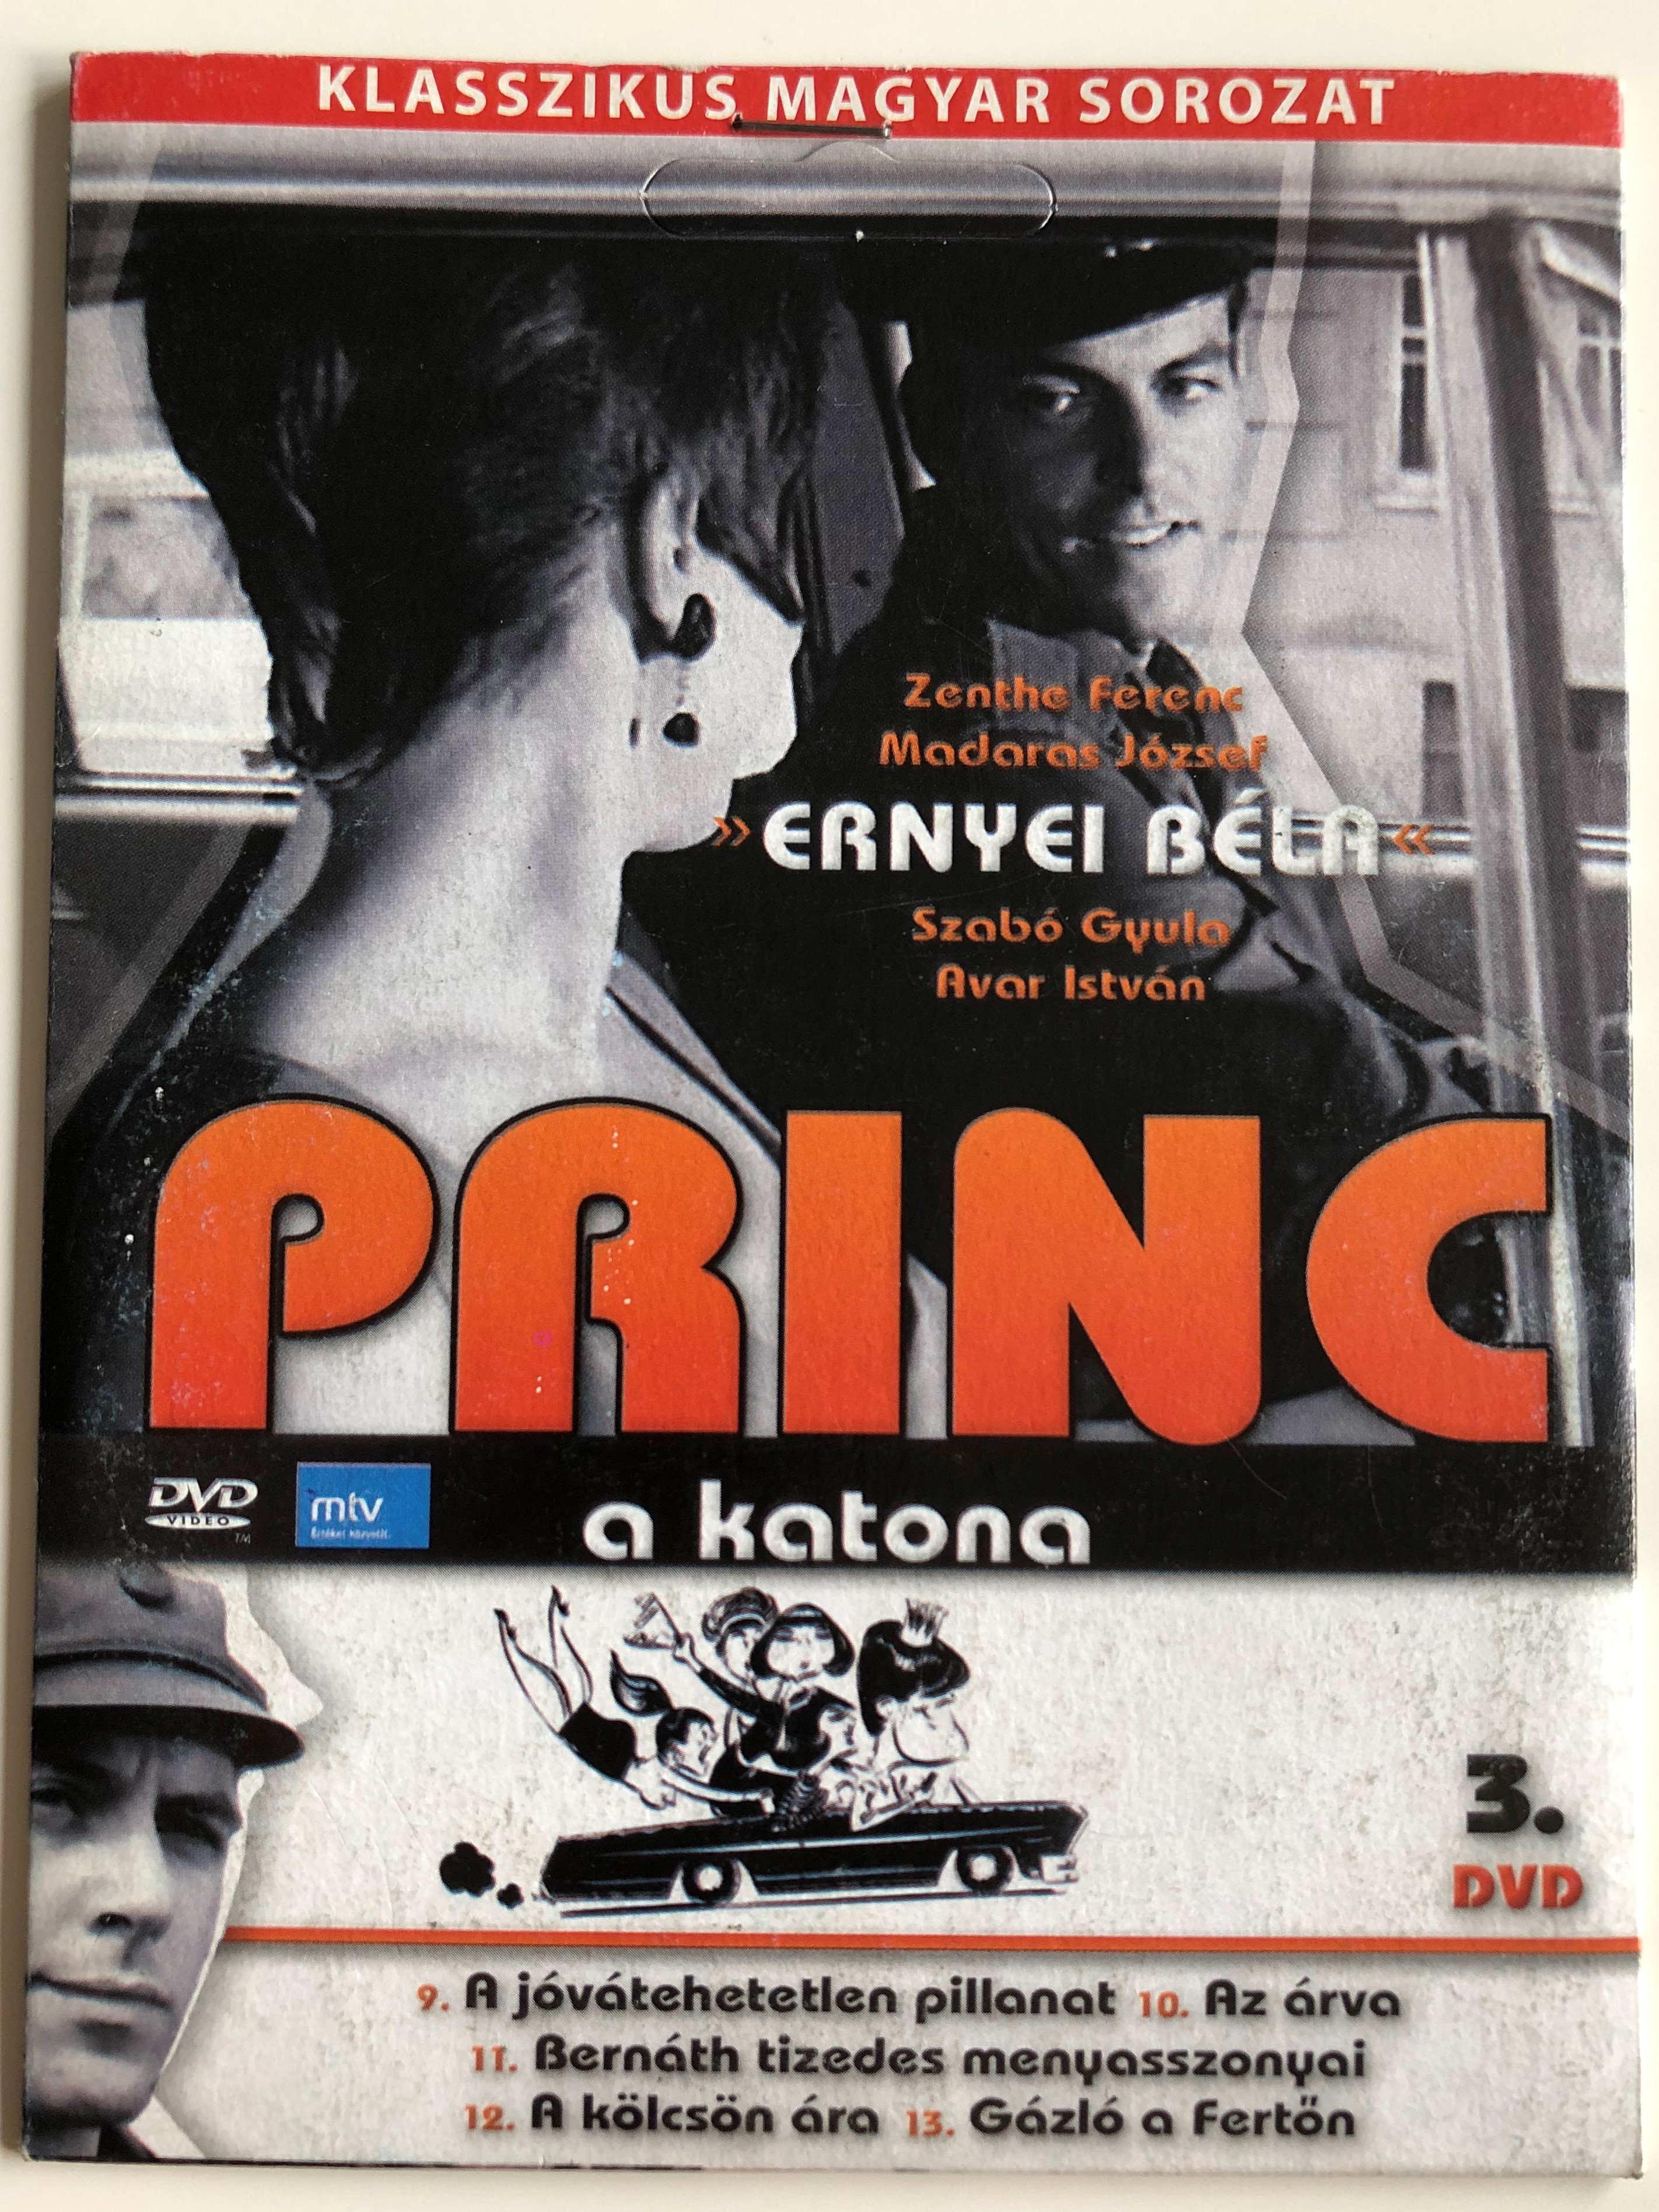 Princ a katona DVD 1966 Vol 3 1.JPG